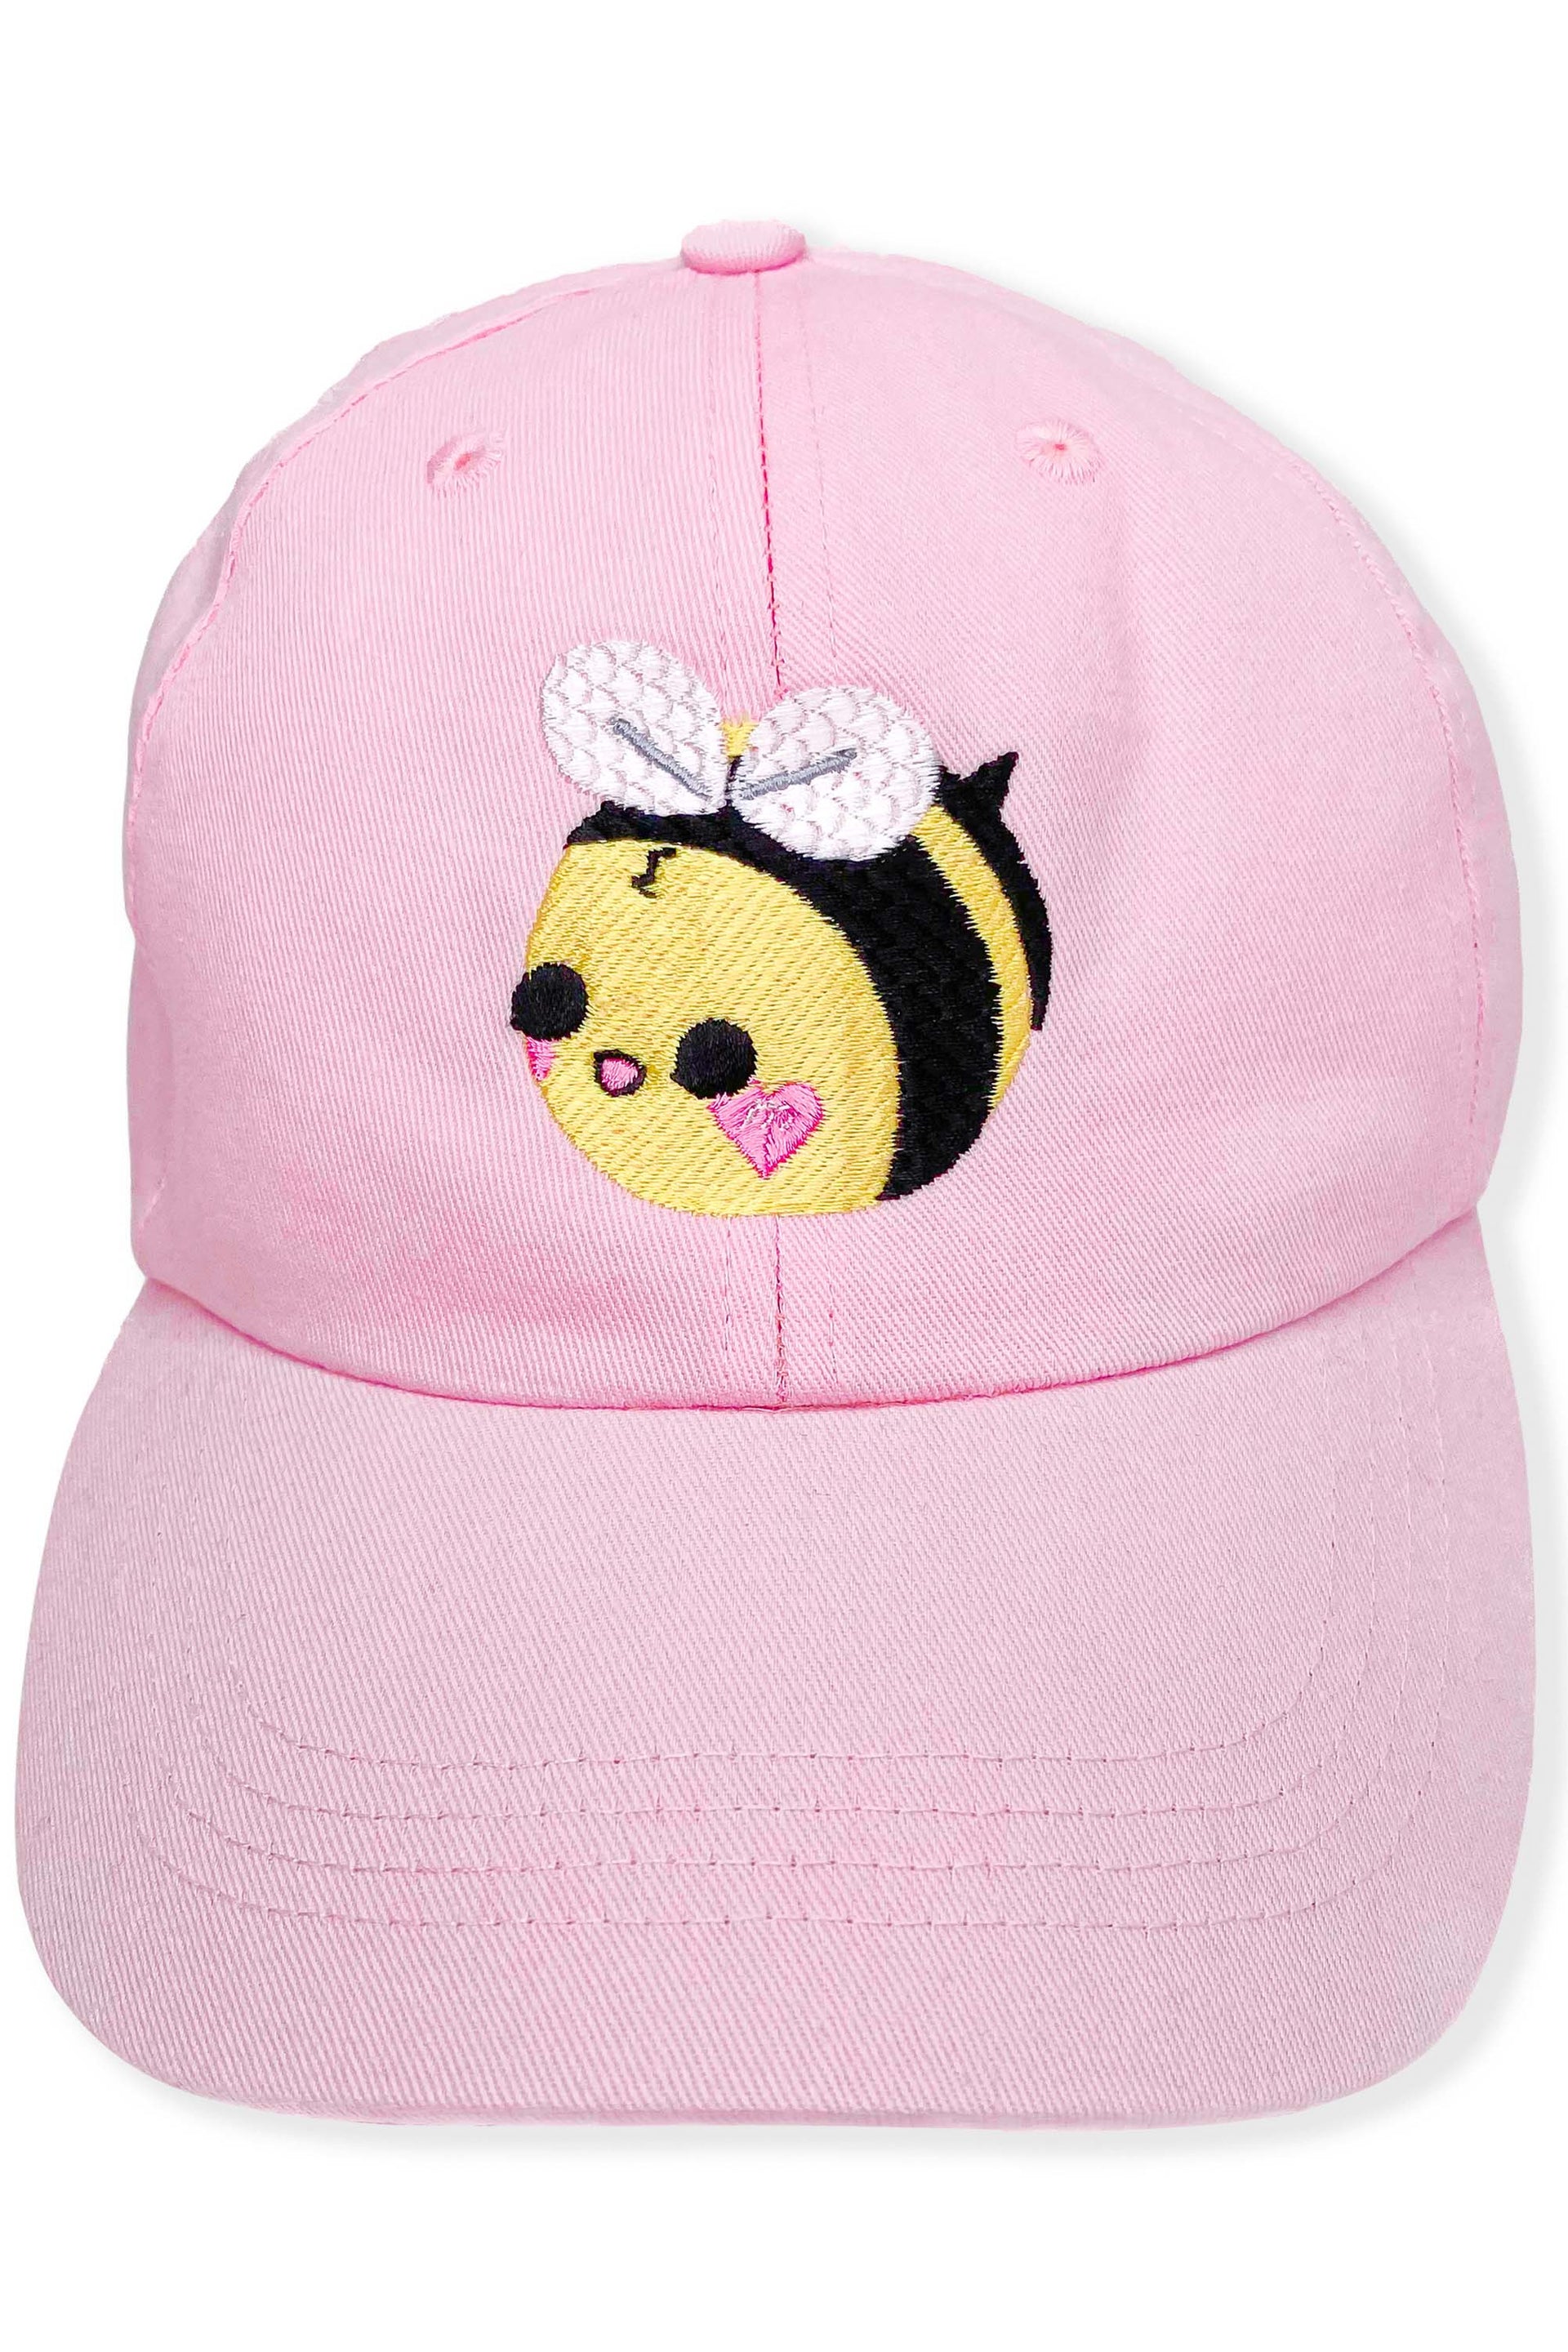 Bibi the Bee Embroidered Cap - Momokakkoii